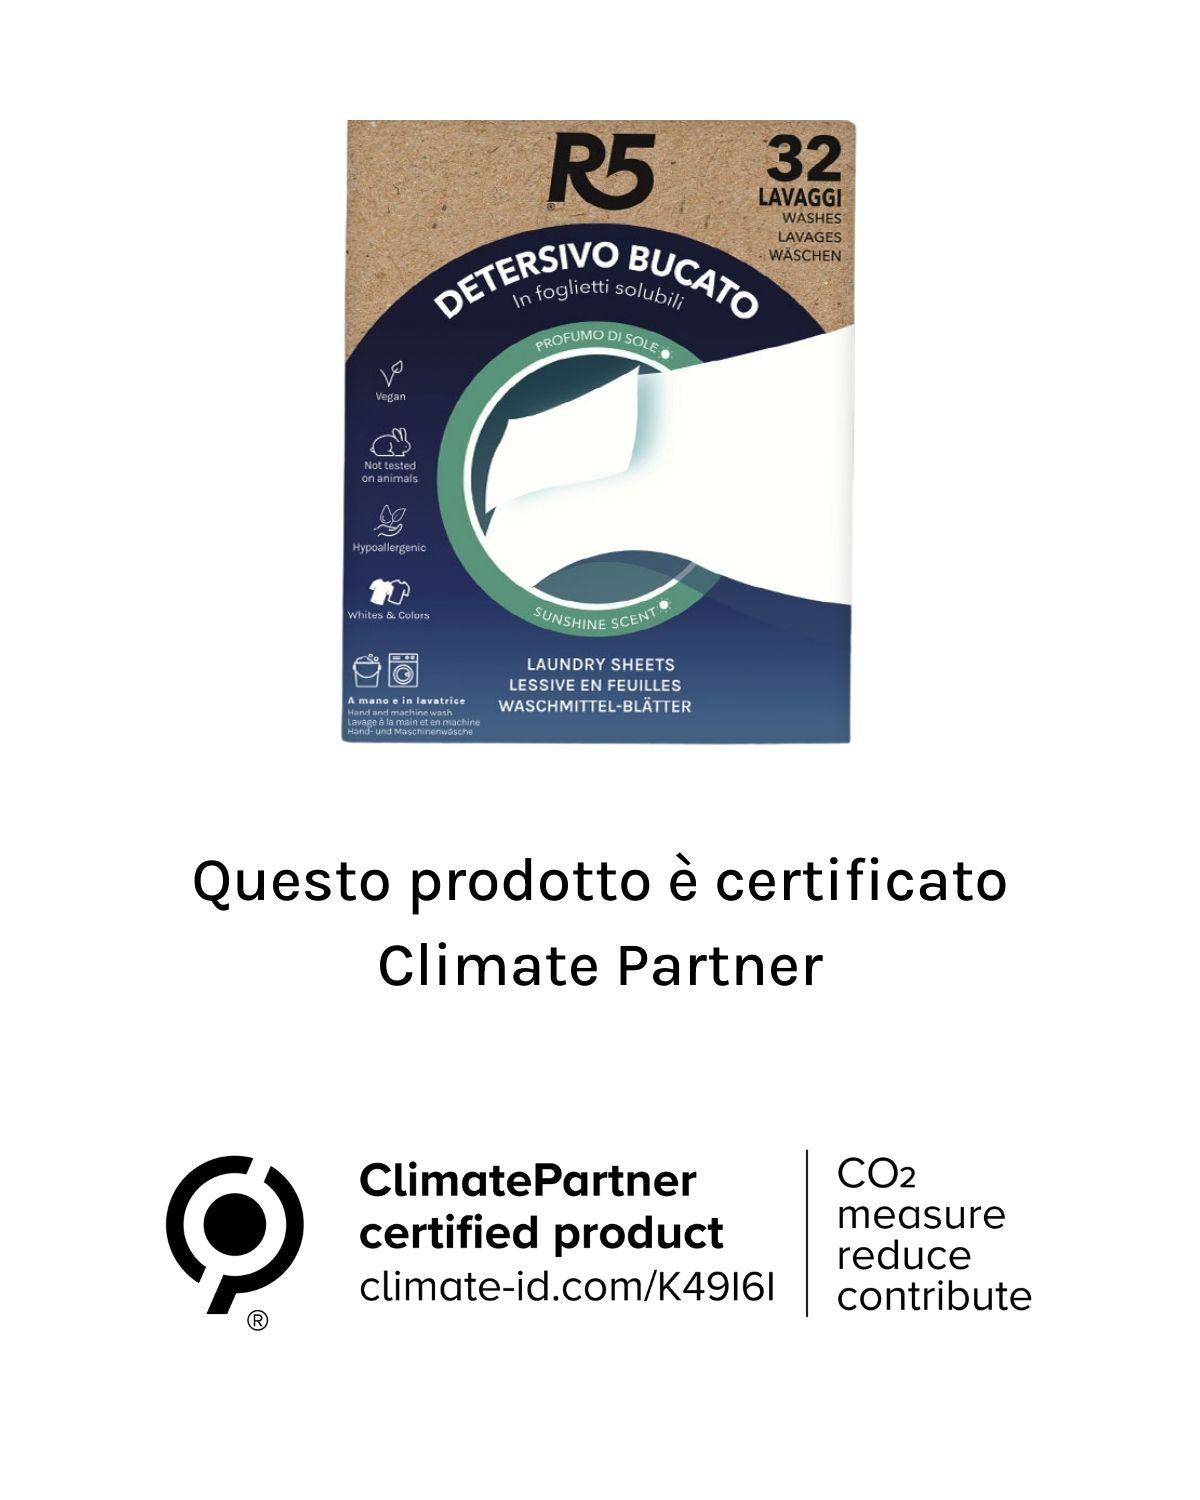 Climate Partner certified foglietti